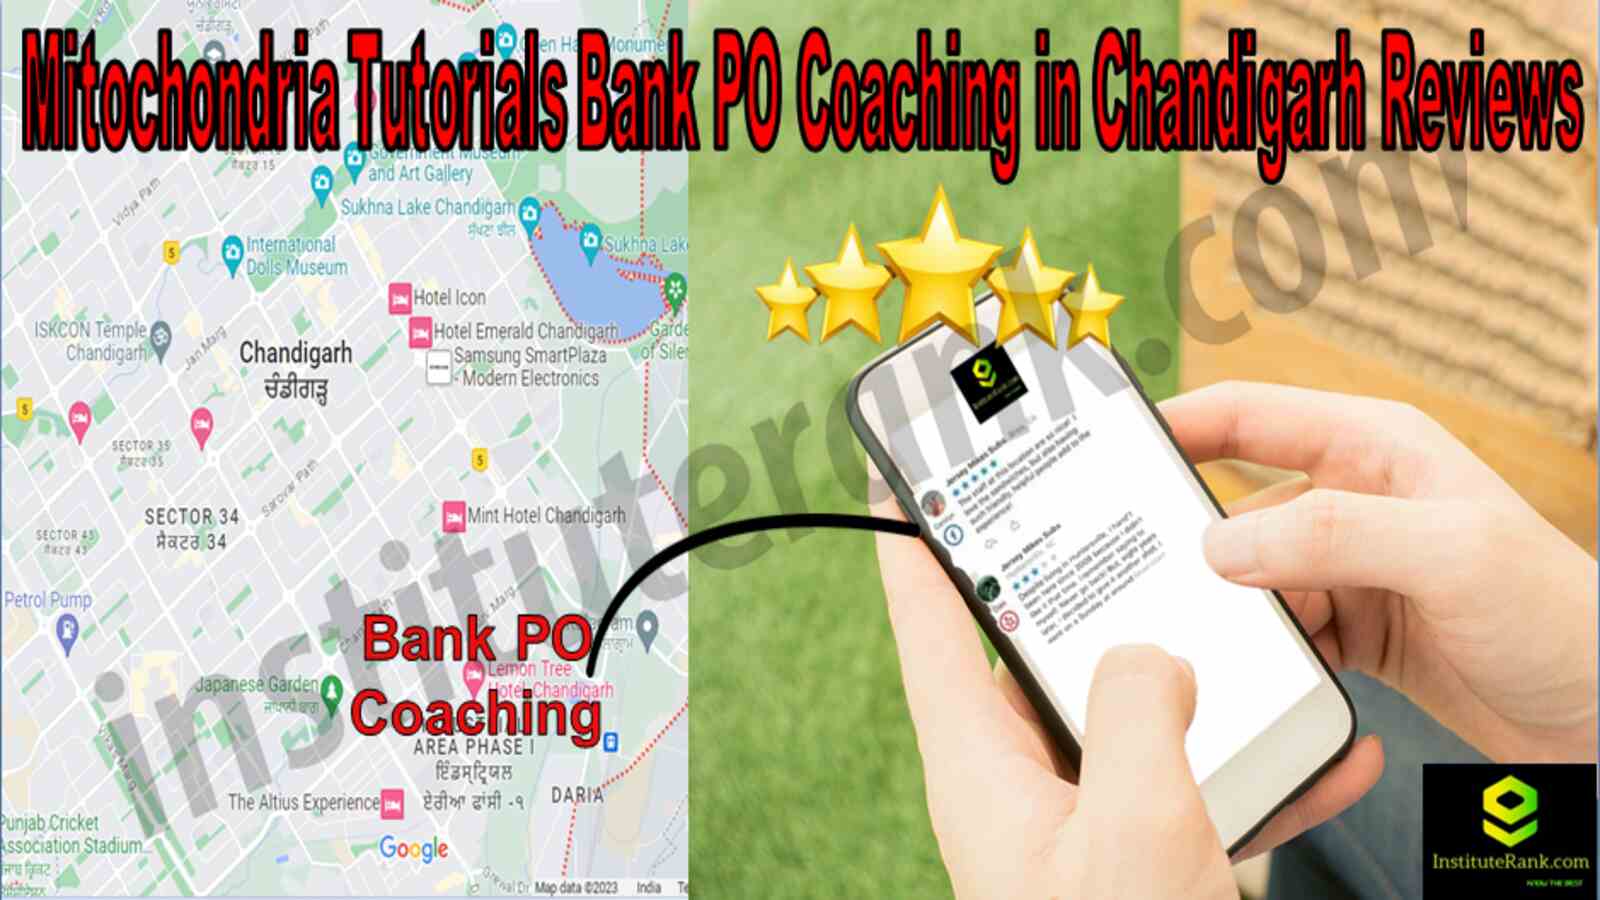   Bank PO Coaching in Chandigarh Reviews